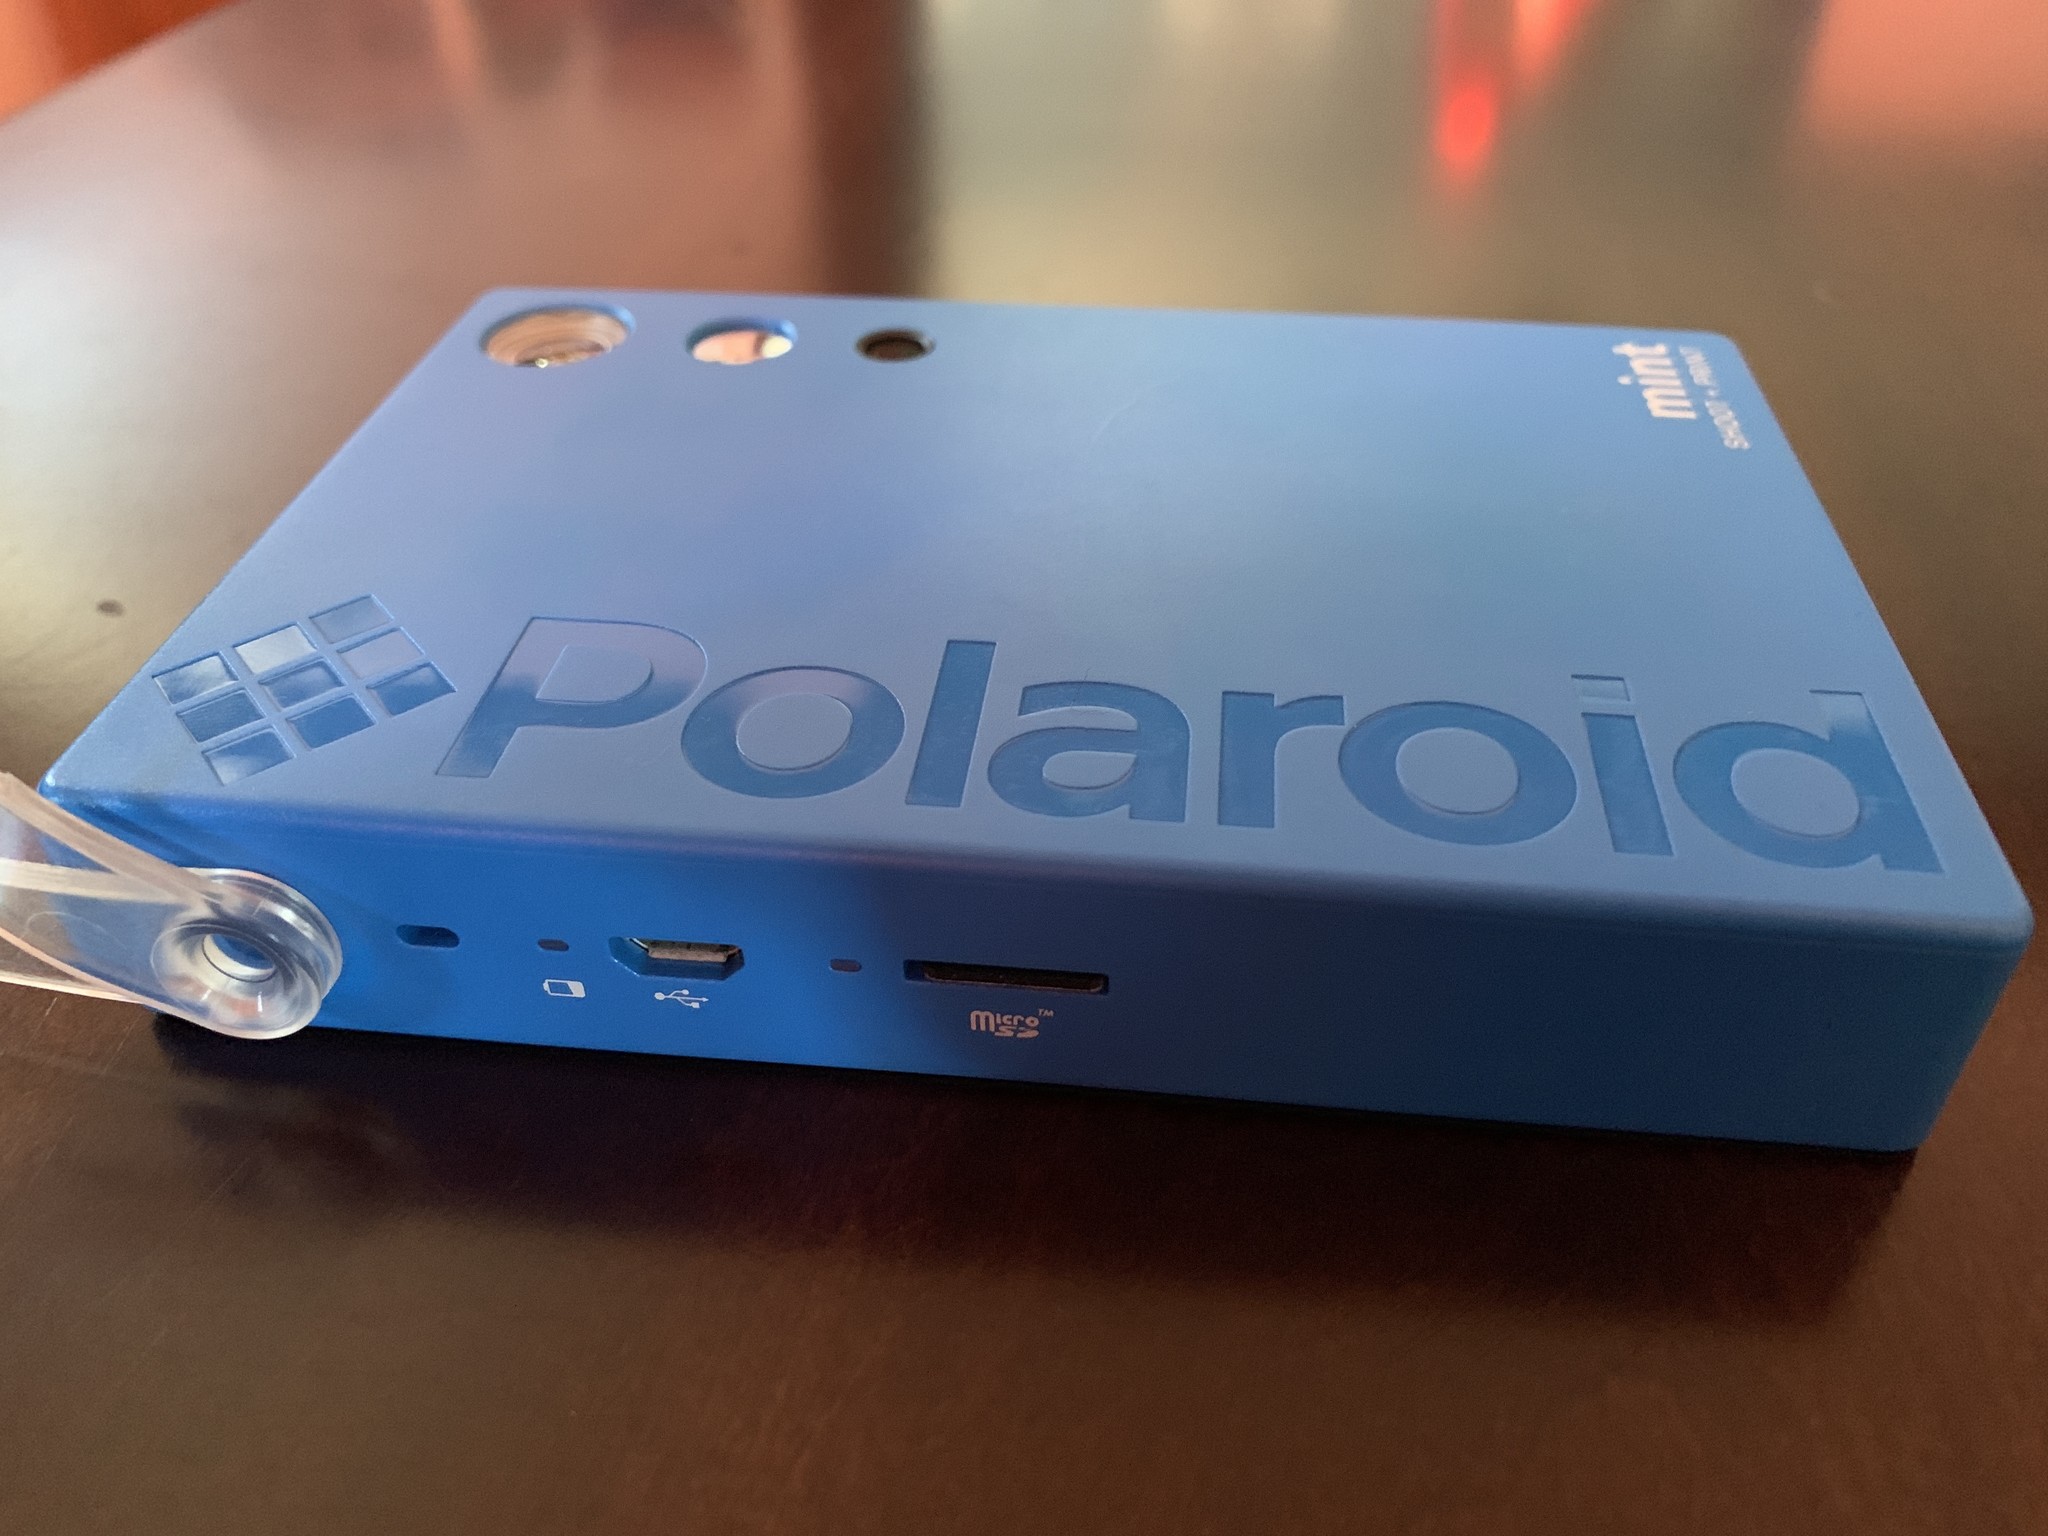 Blue Polaroid Mint Camera & Printer side where the power light and microSD card slot are